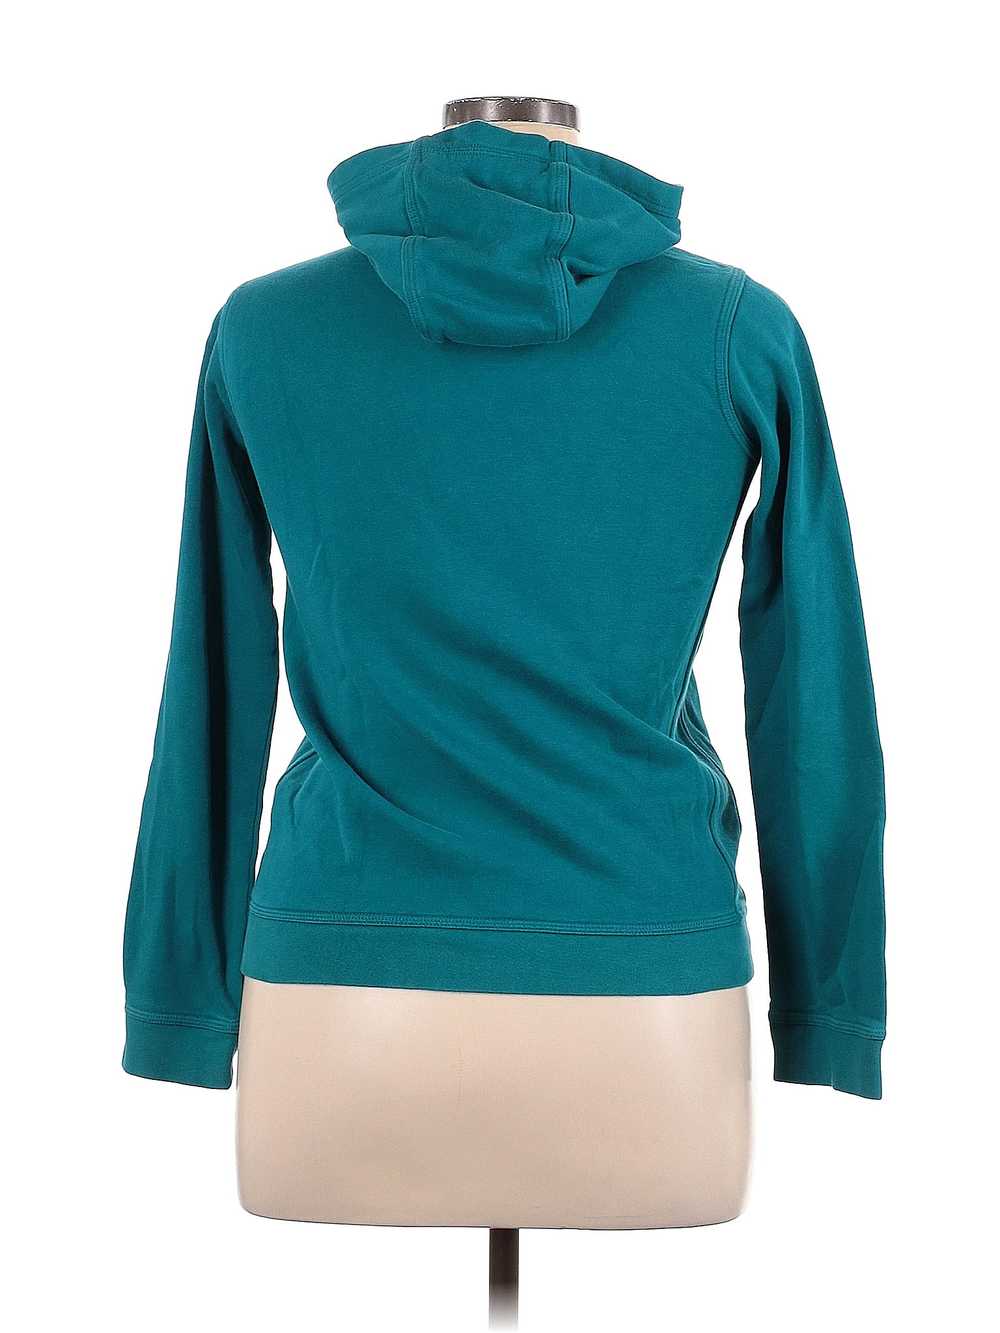 Nike Women Green Pullover Hoodie XL - image 2